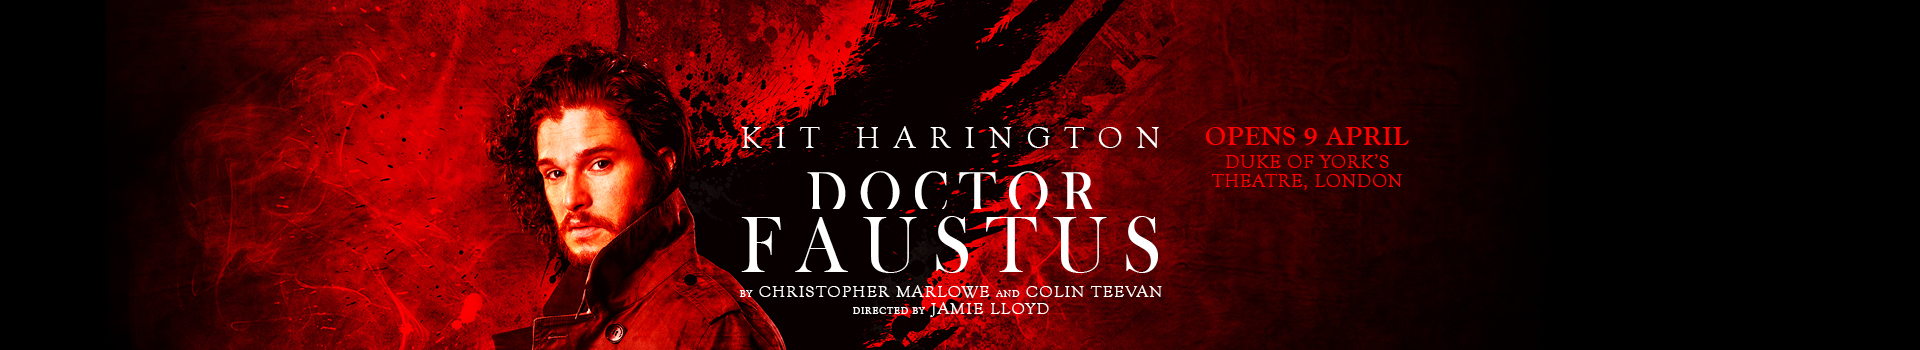 Dr Faustus tickets London Duke of York's Theatre starring Kit Harington